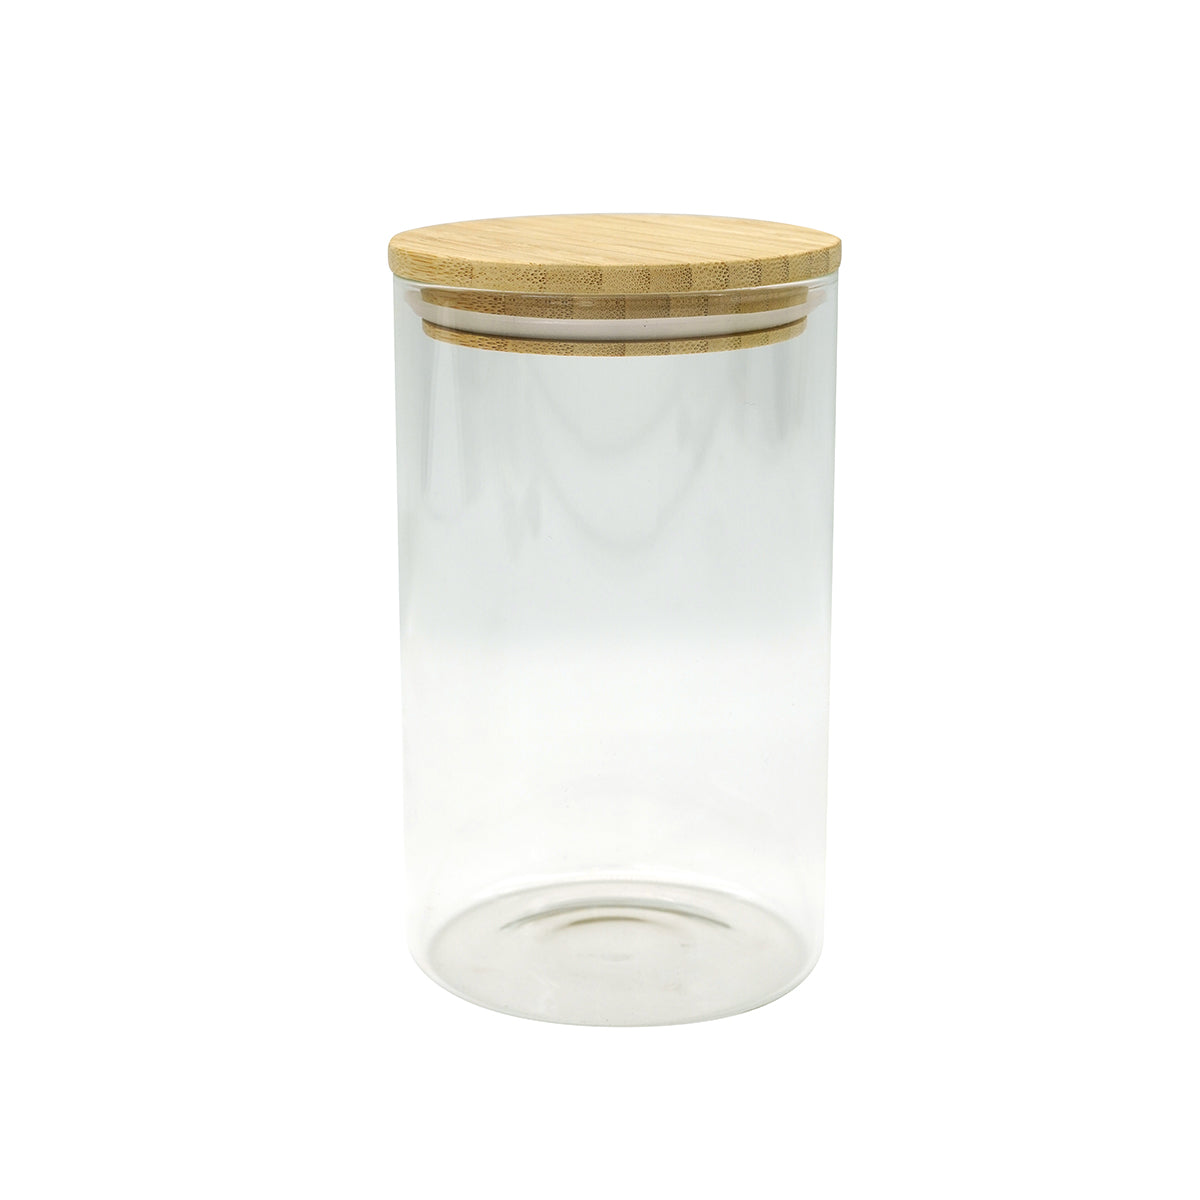 Set de 4 boîtes de conservation en verre avec couvercle en Bambou Fackelmann Eco Friendly